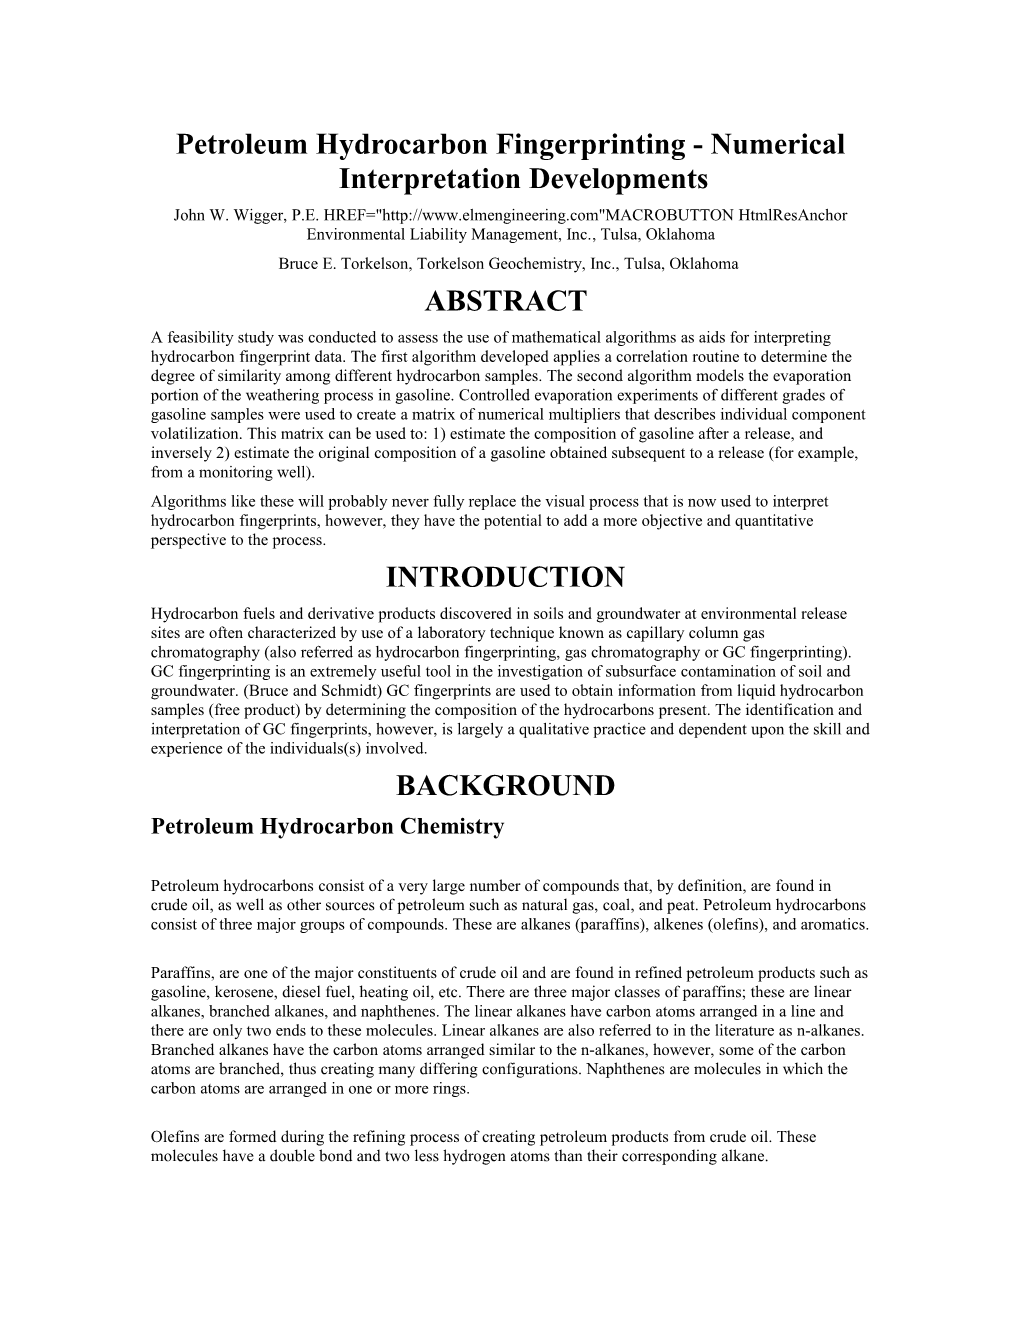 Petroleum Hydrocarbon Fingerprinting - Numerical Interpretation Developments